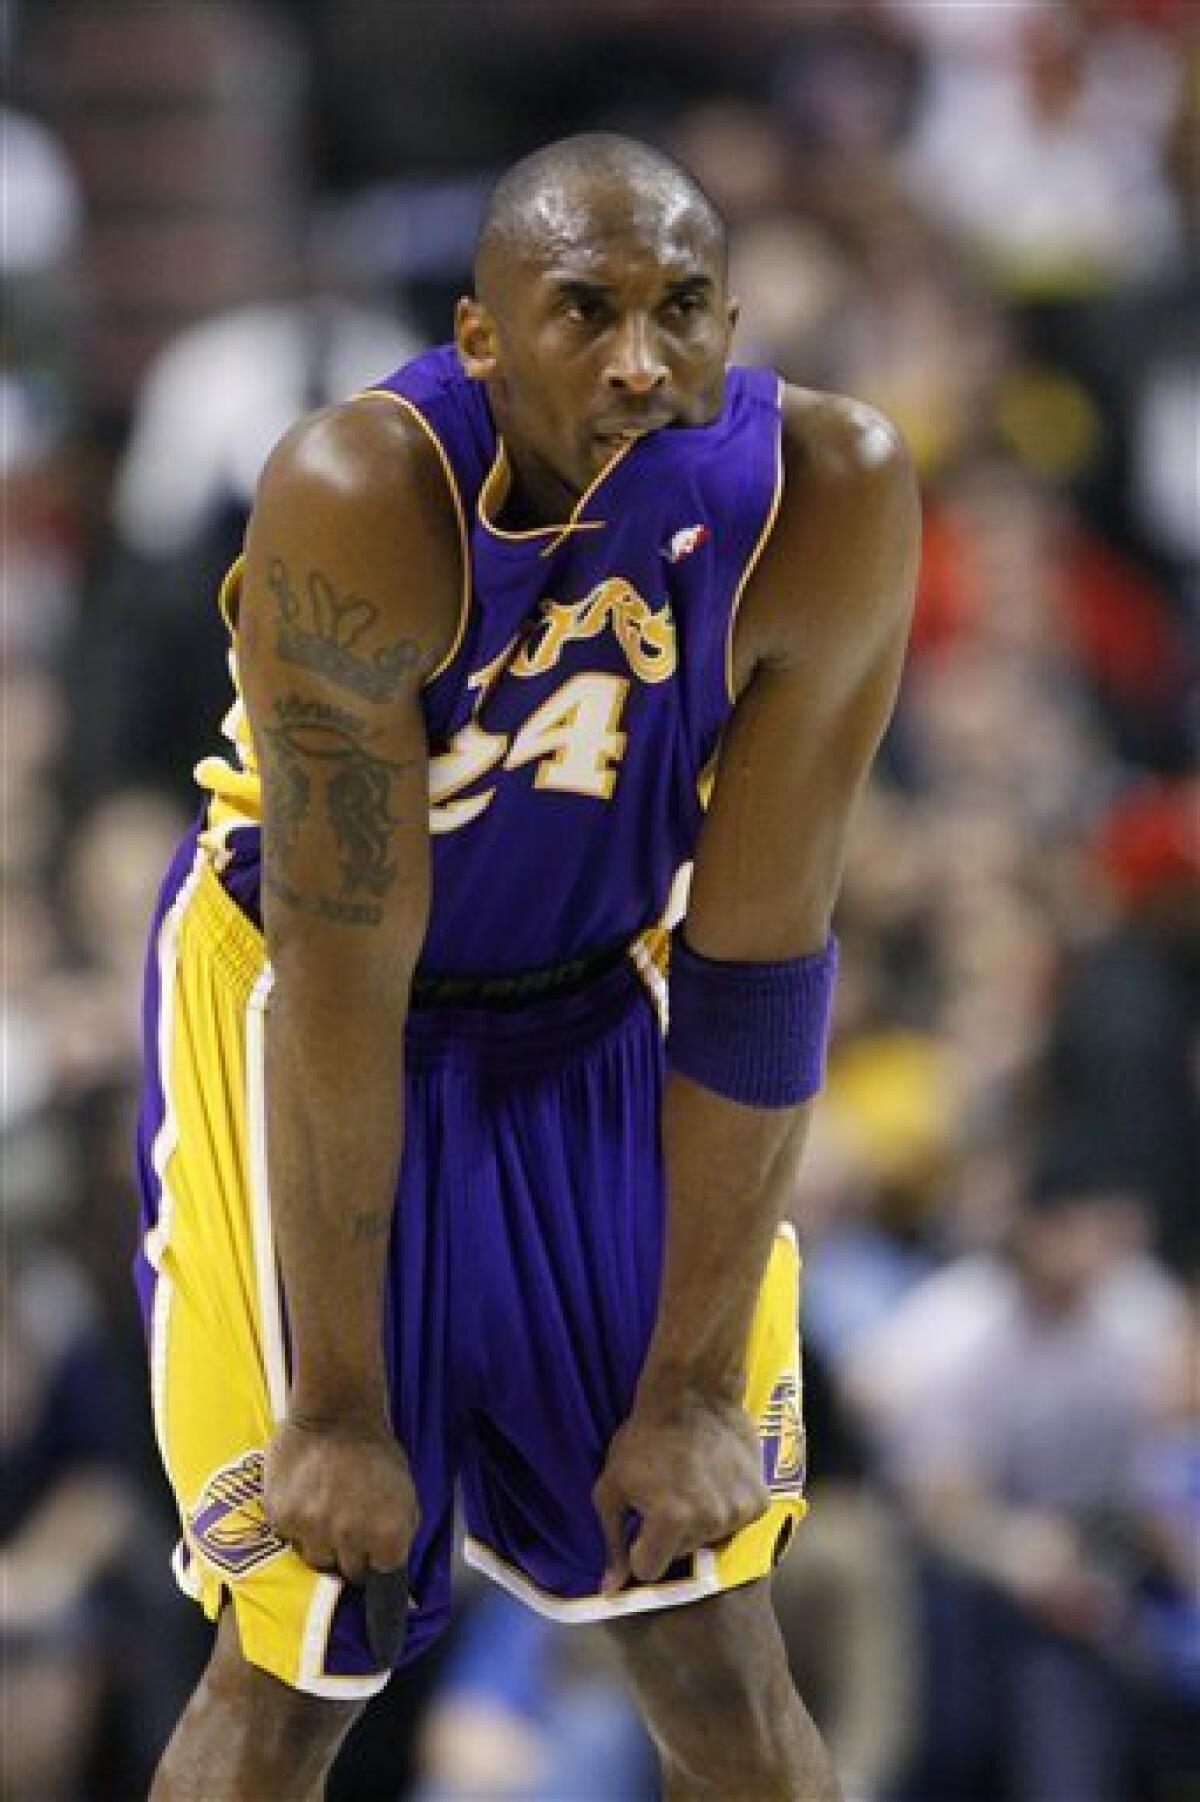 Kobe Bryant Signed Nike Los Angeles Lakers Shooting Shirt Jersey